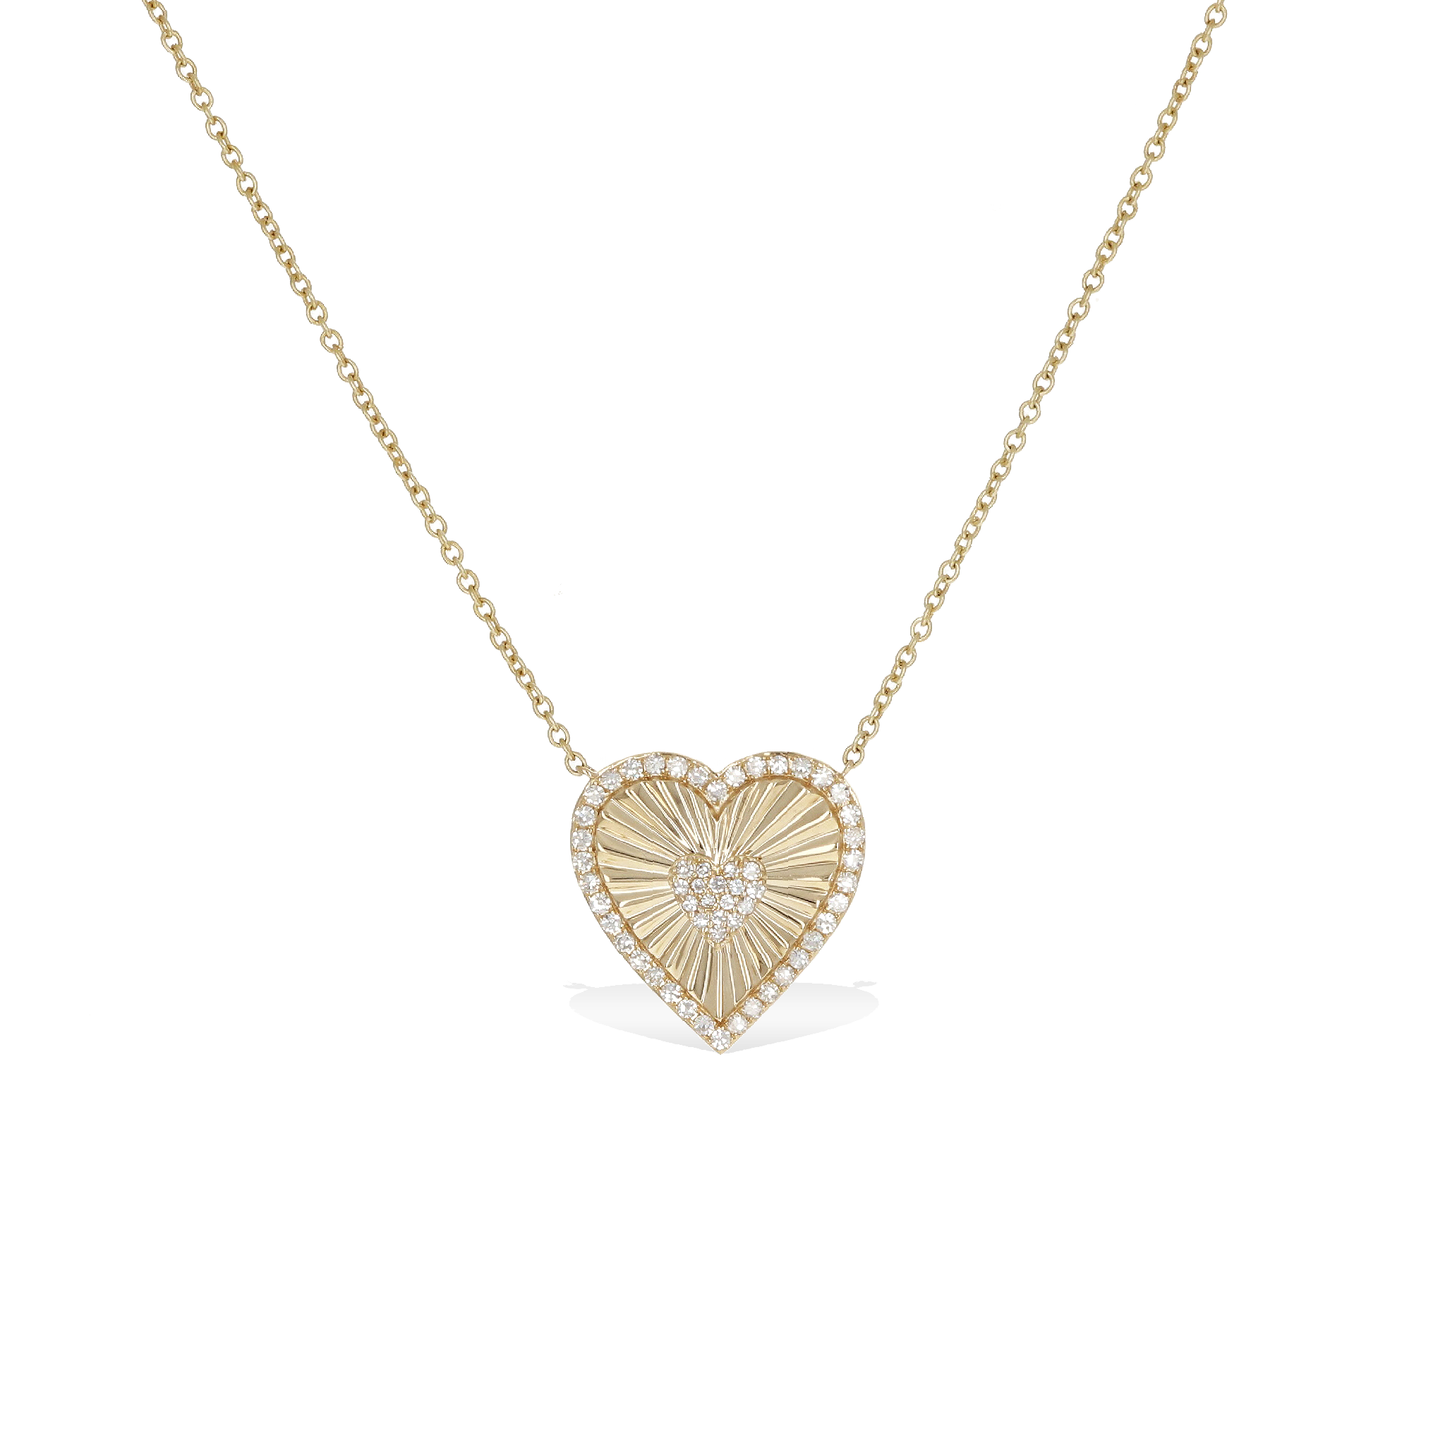 Modern Starburst Gold & Diamond Heart Necklace from Alexandra Marks Jewelry